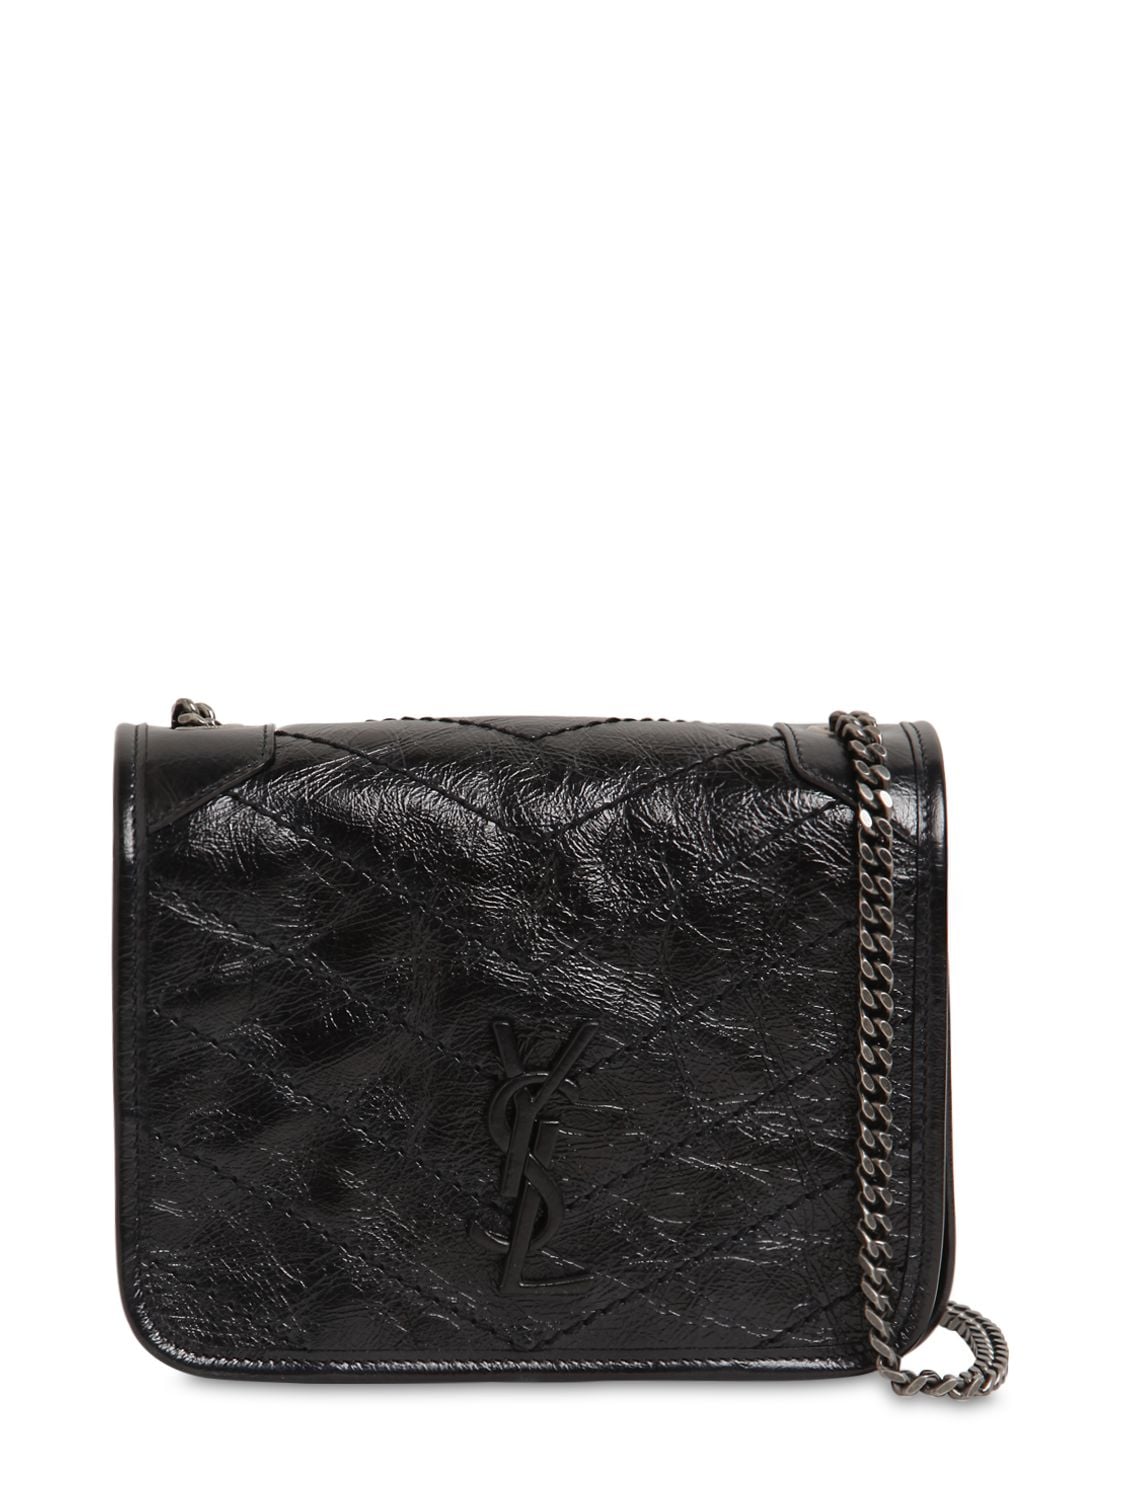 Saint Laurent Niki Vintage Leather Chain Wallet Bag In Black